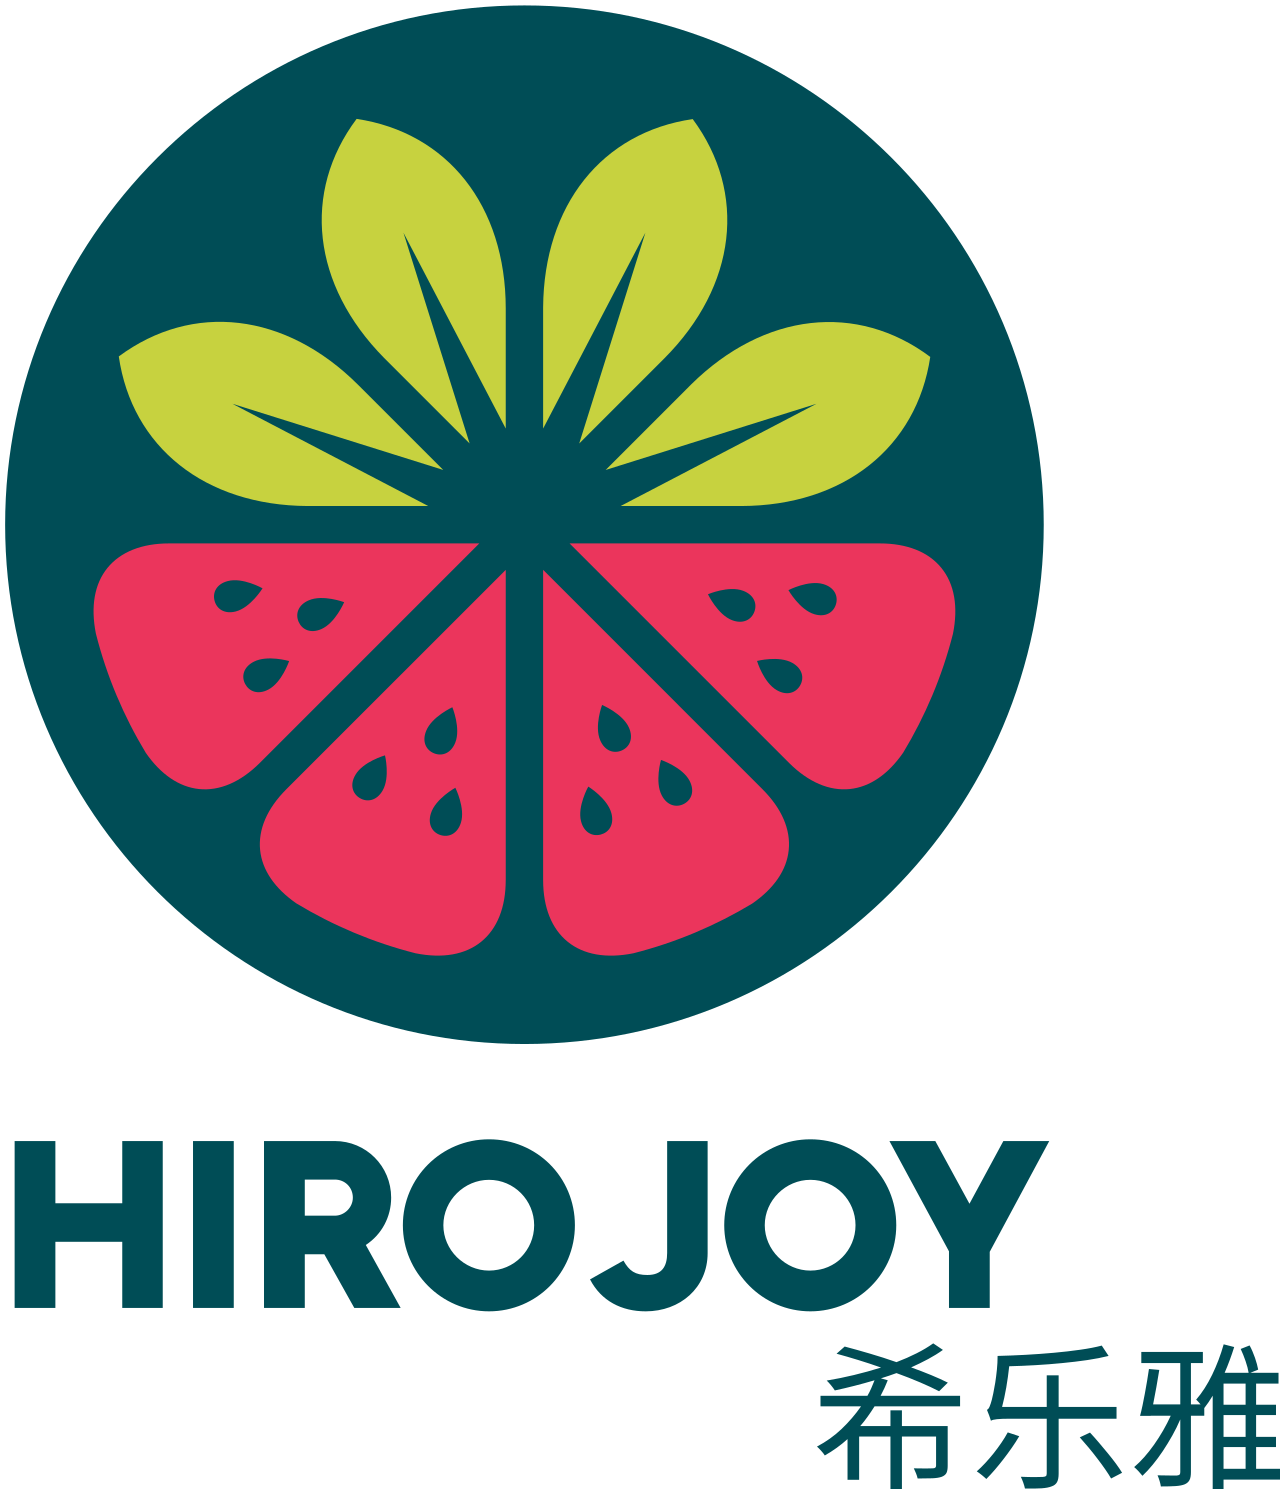 HIROJOY's web page